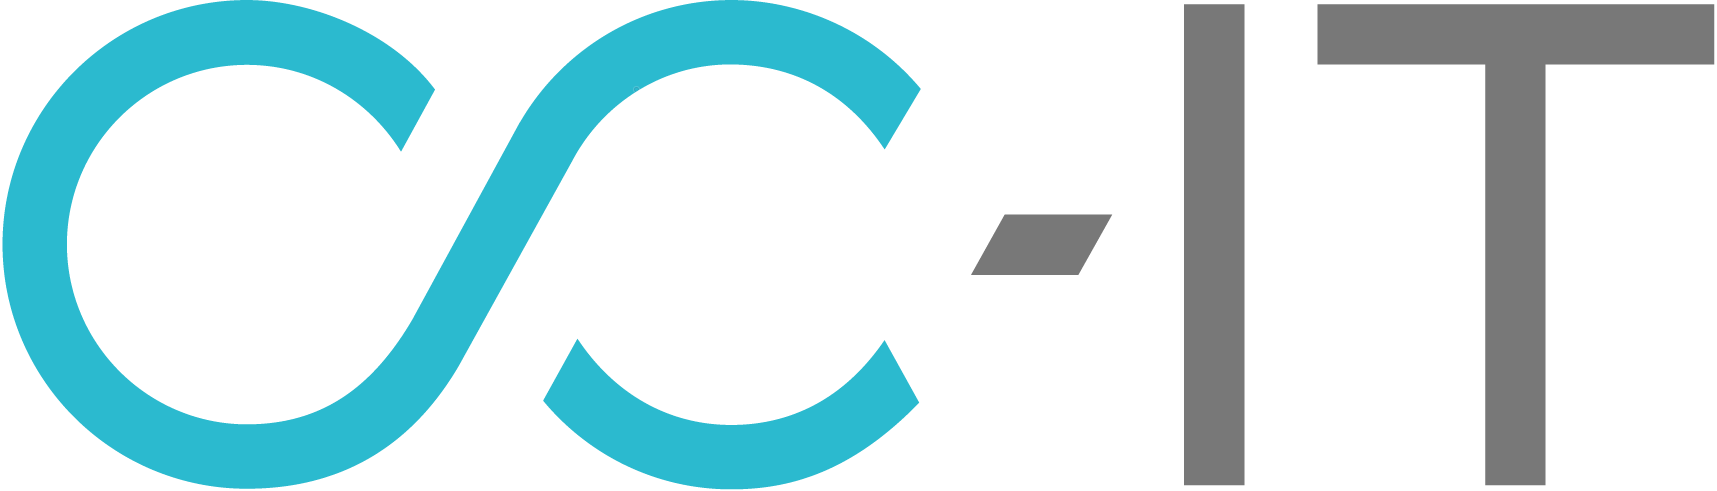 cc_it_logo